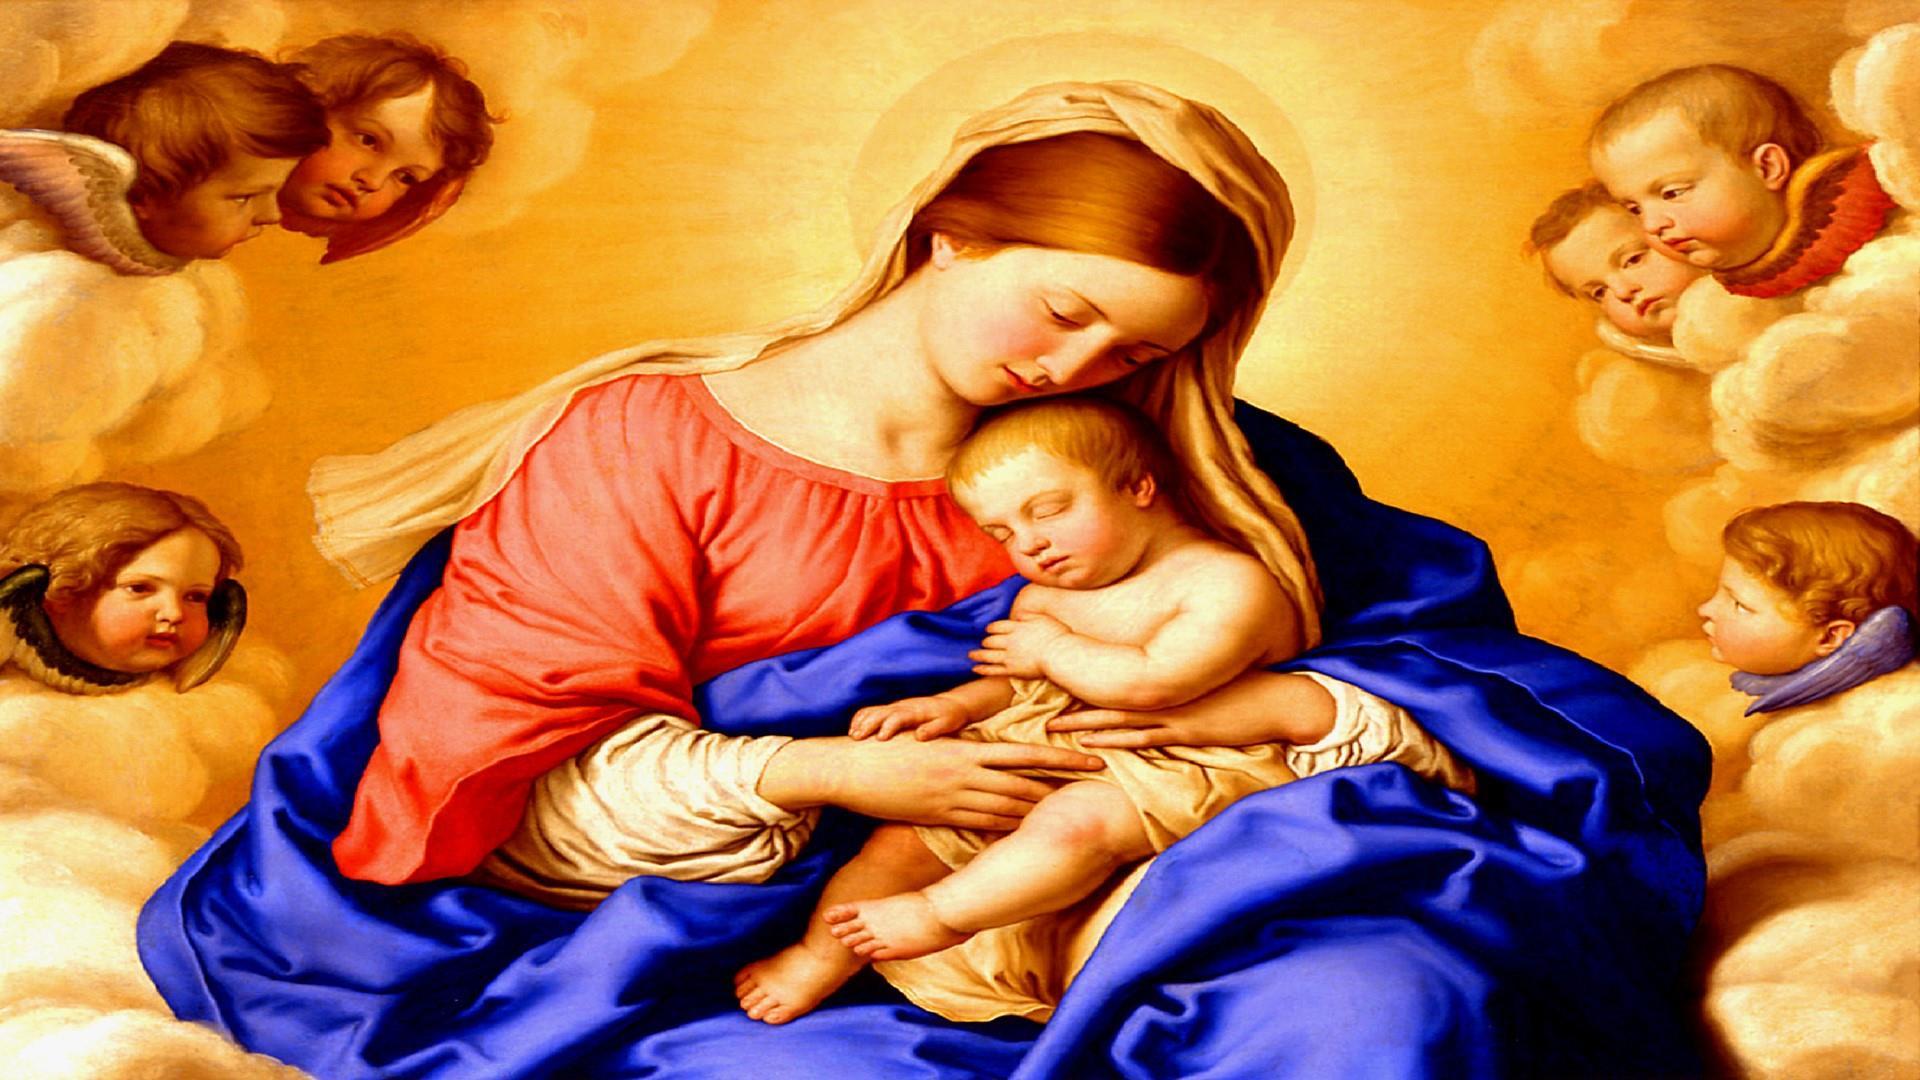 Virgin Mary With Child Jesus Wallpaper. Wallpaper Studio 10